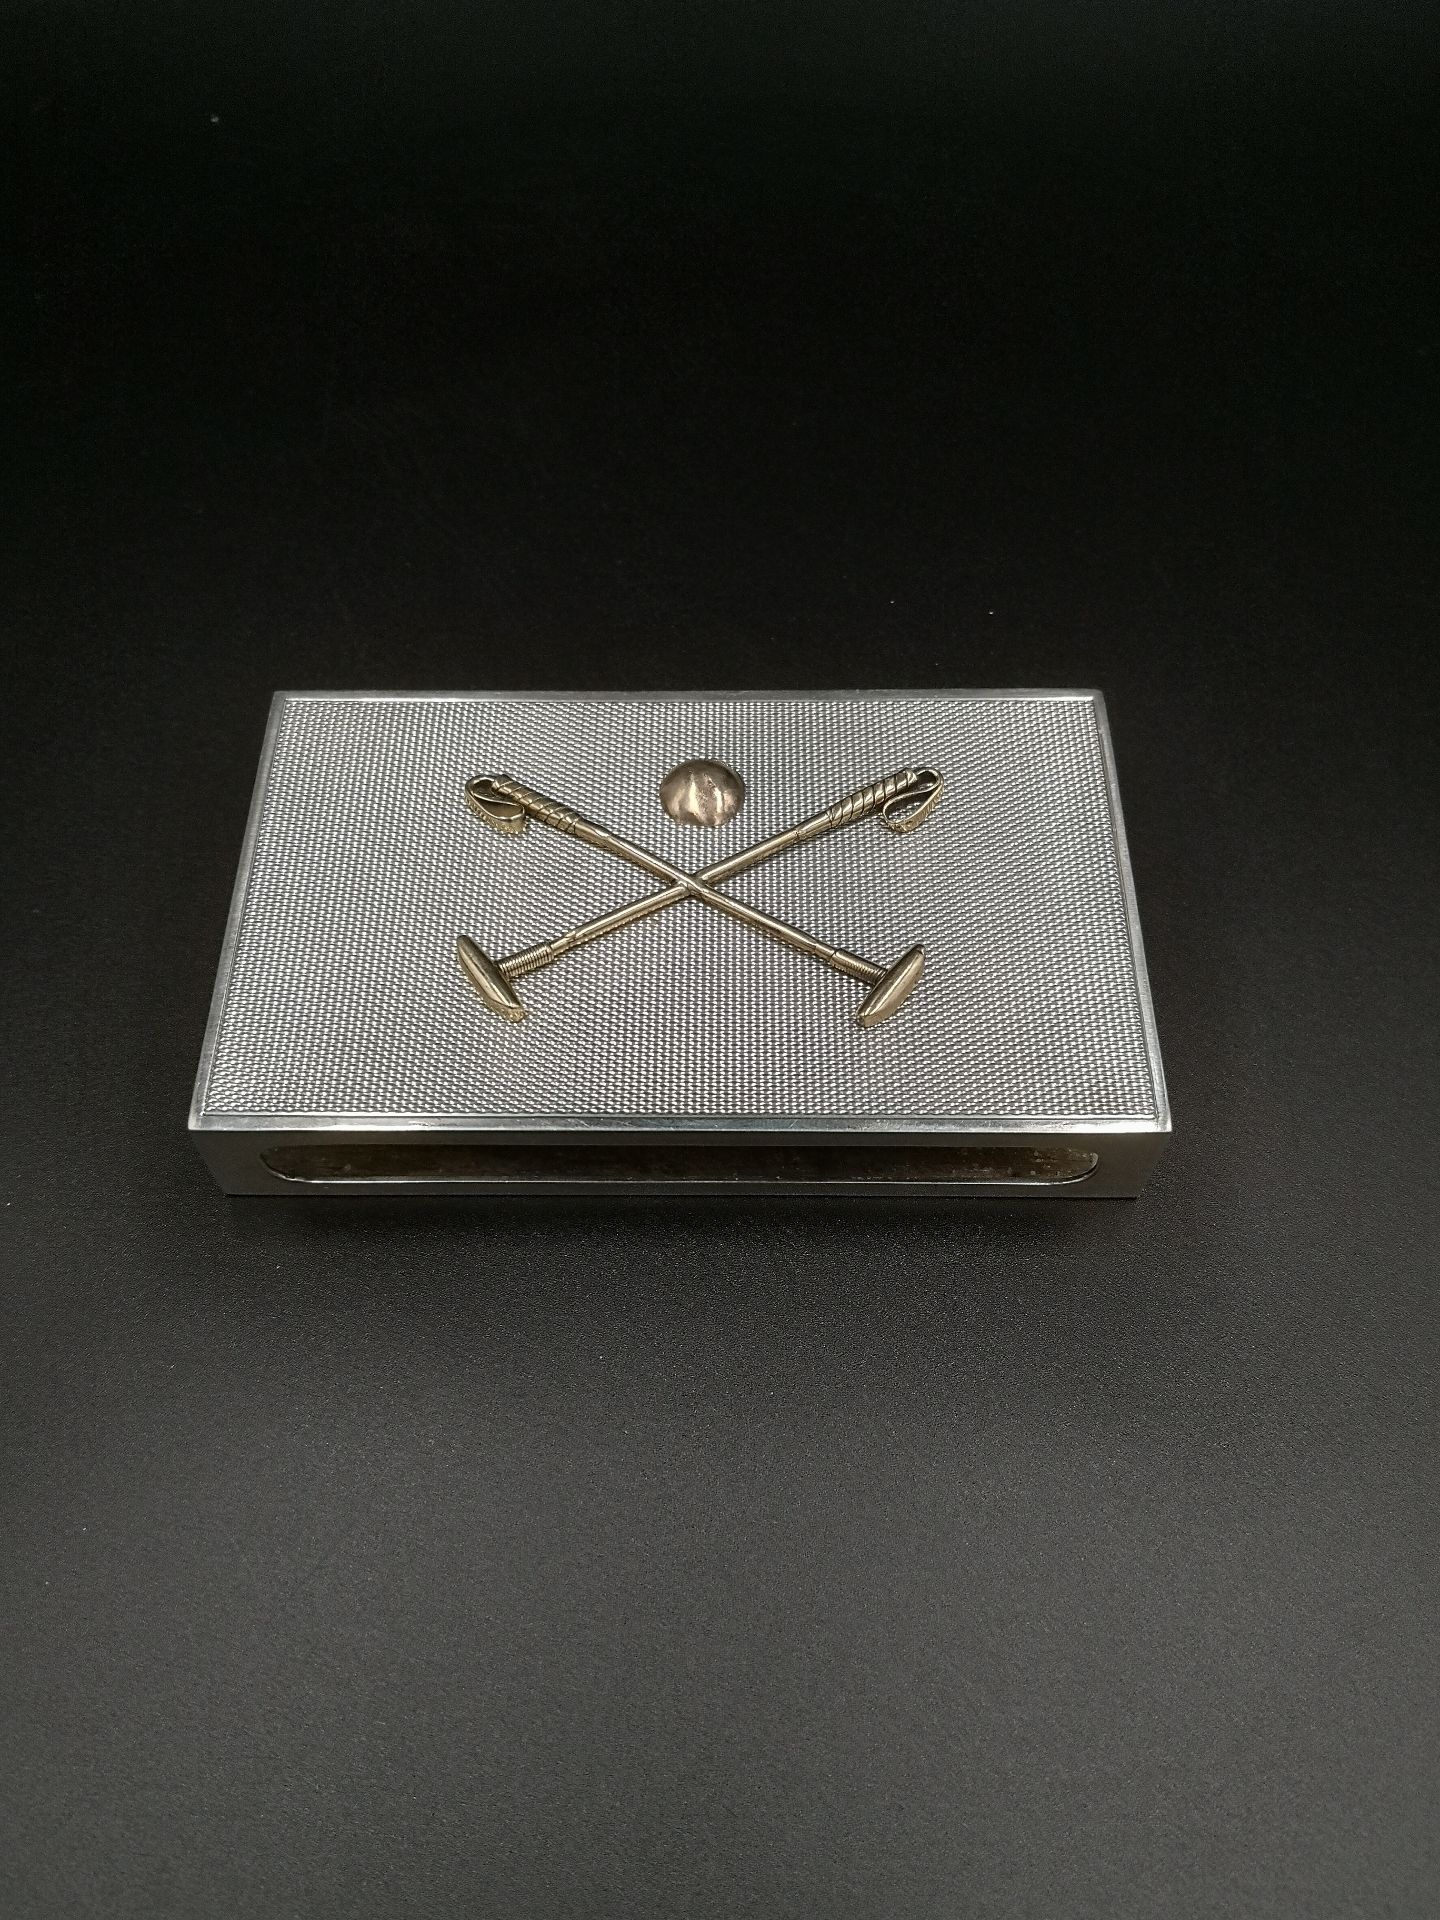 Asprey silver matchbox holder with gold detailing